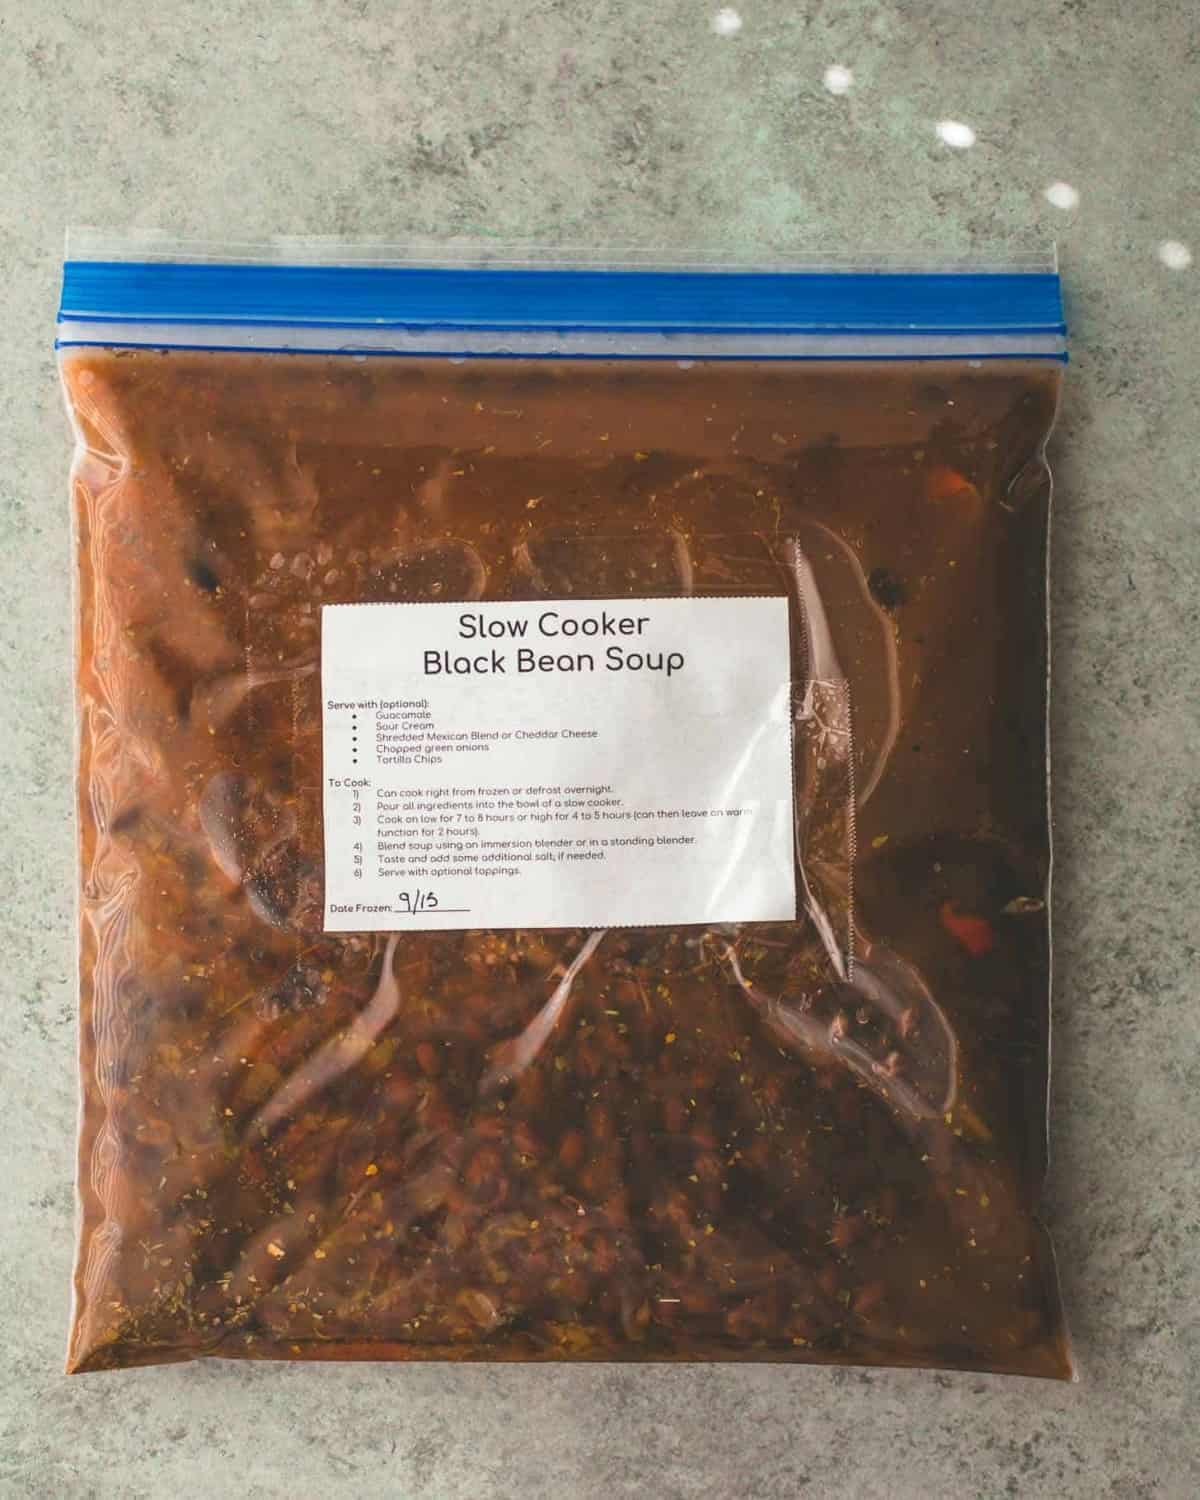 Slow Cooker Black Bean Soup in a freezer bag